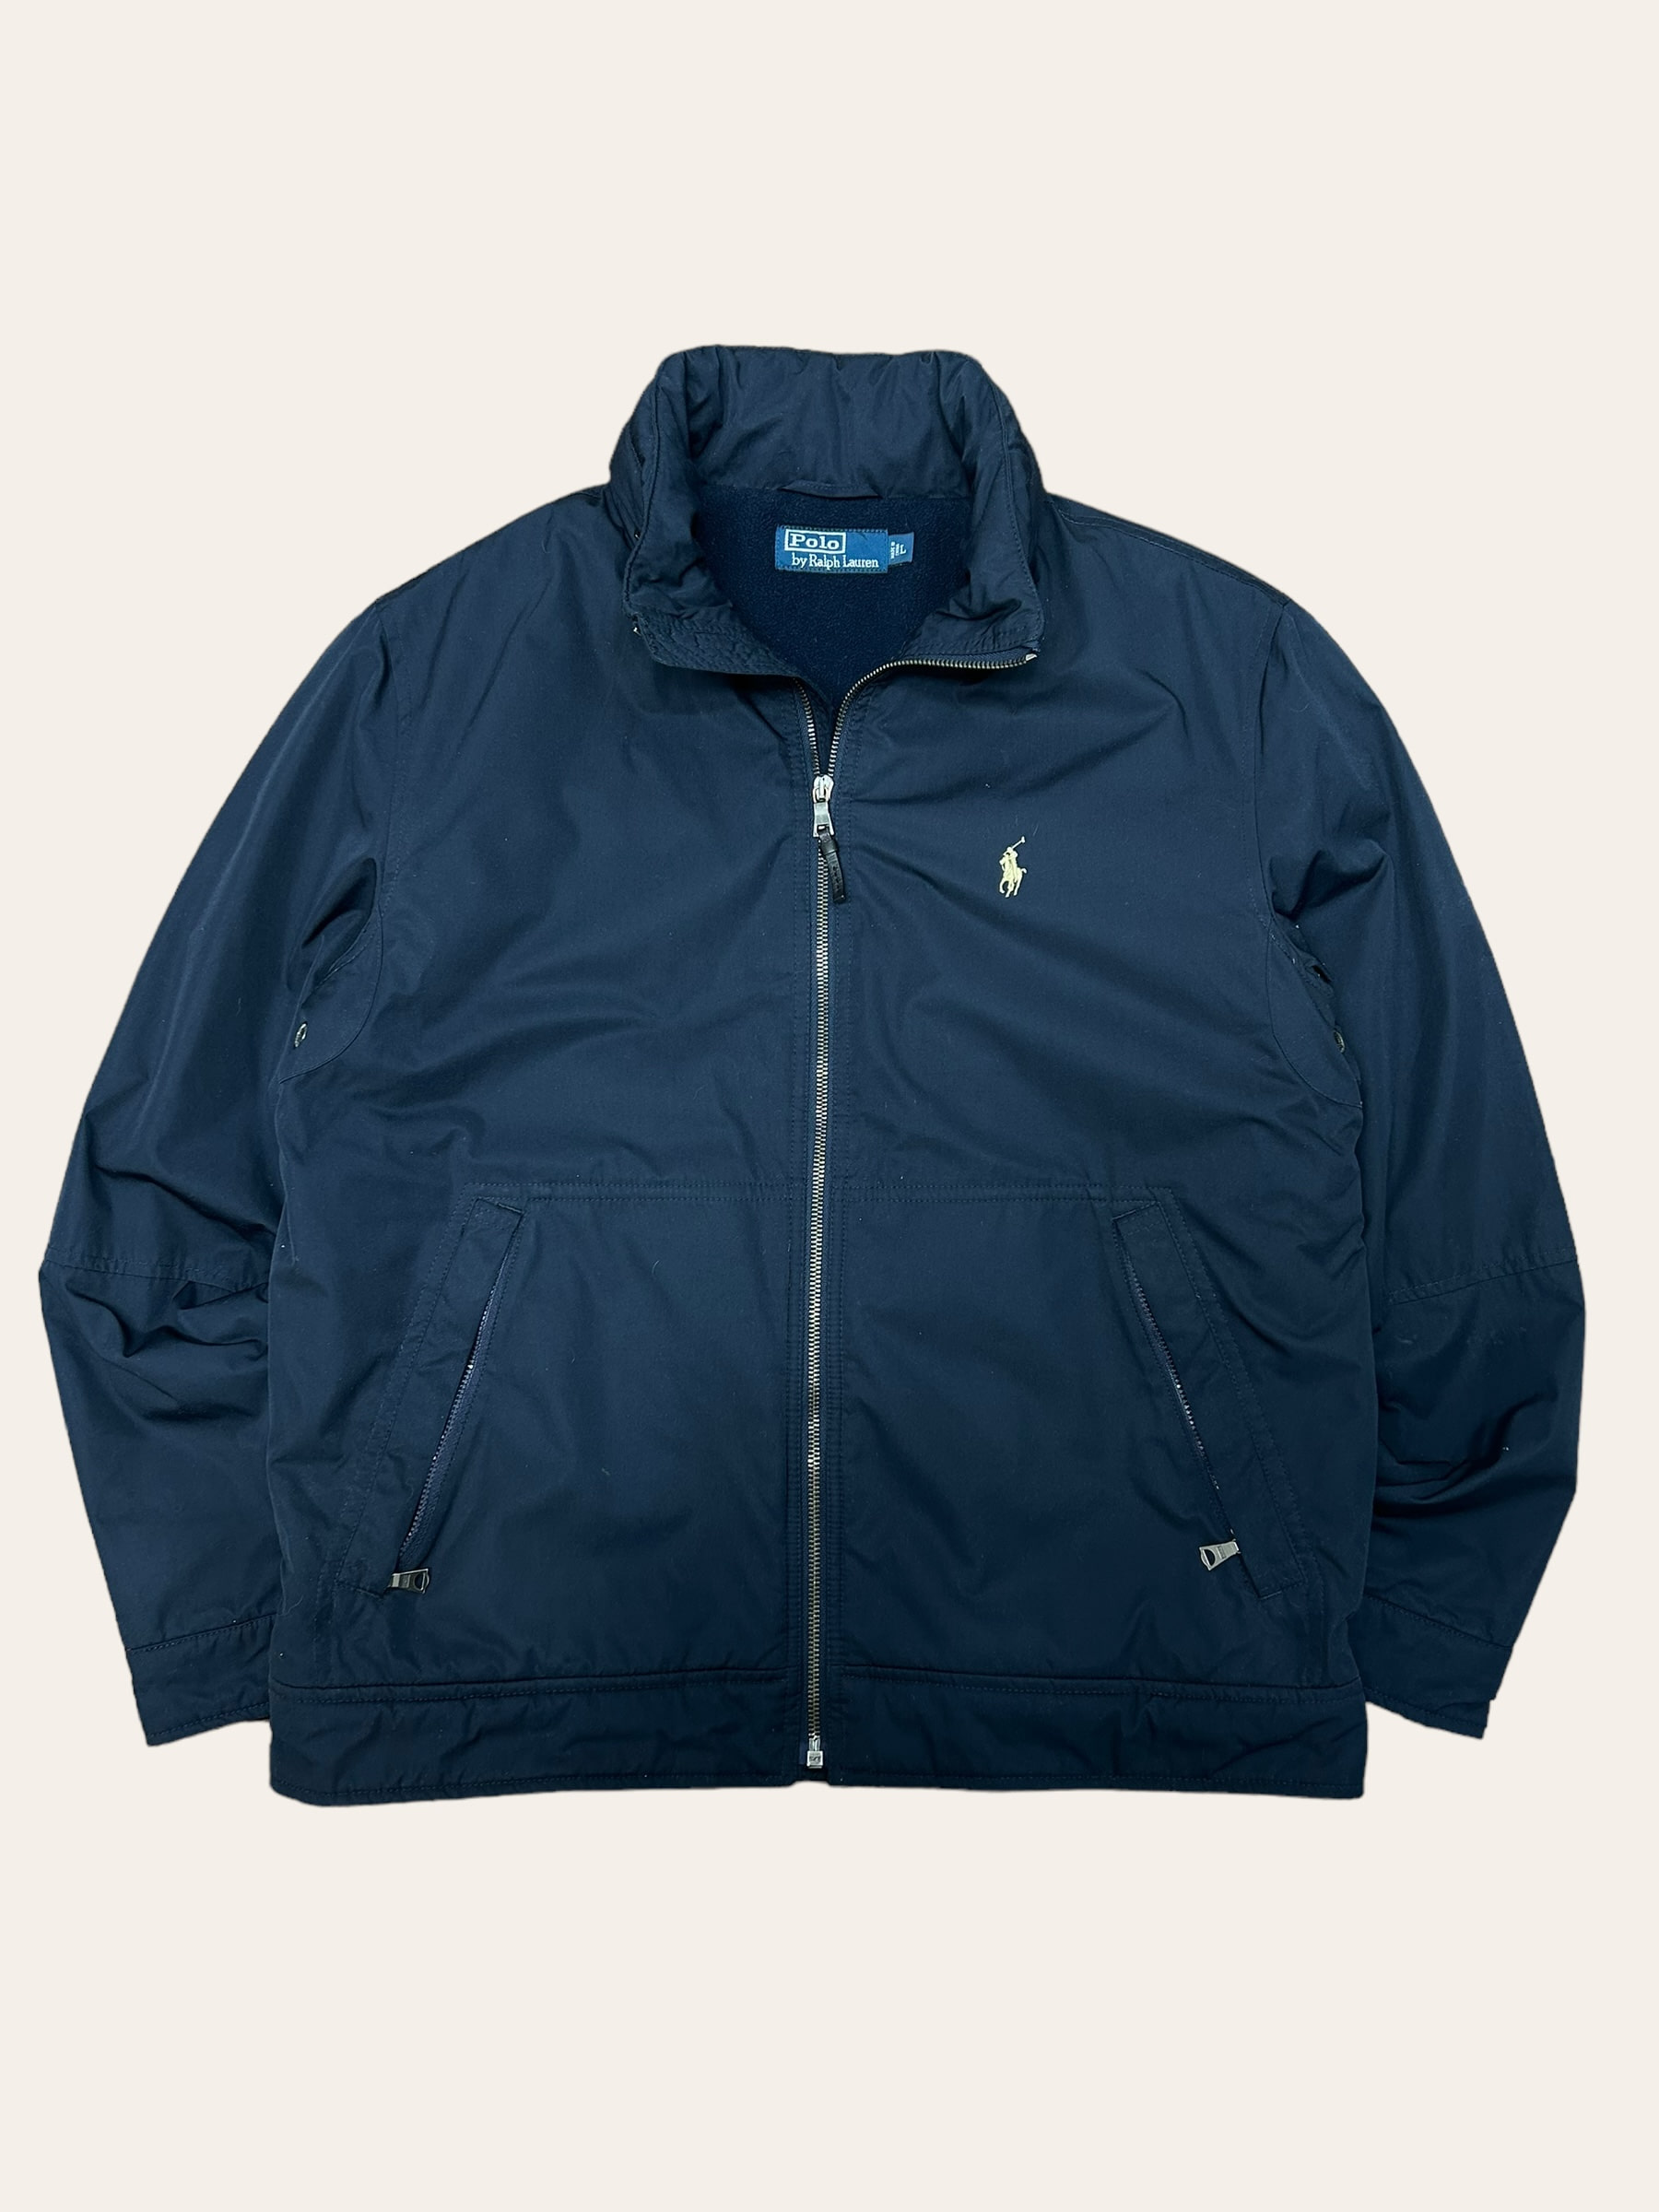 Polo ralph lauren navy polyester blouson jacket L